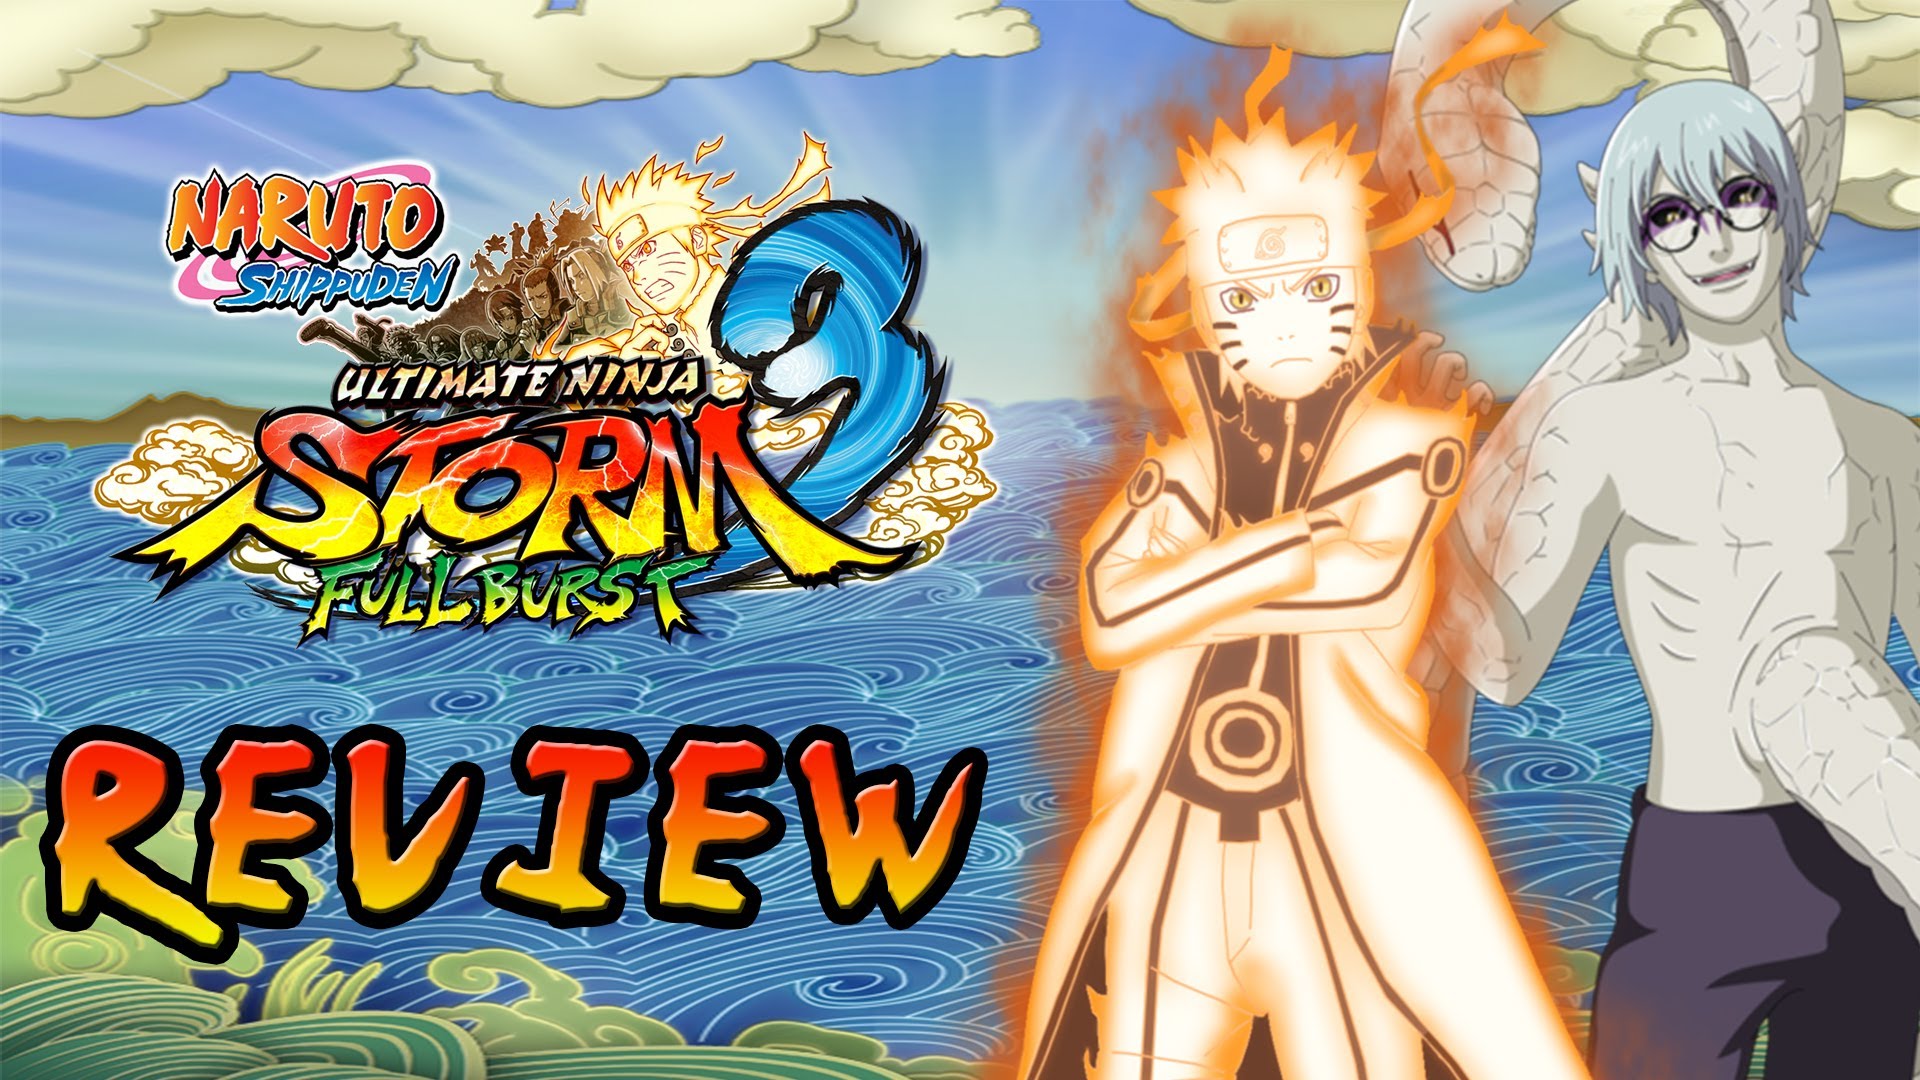 Naruto Shippuden Ultimate Ninja Storm 3 Full Burst Review